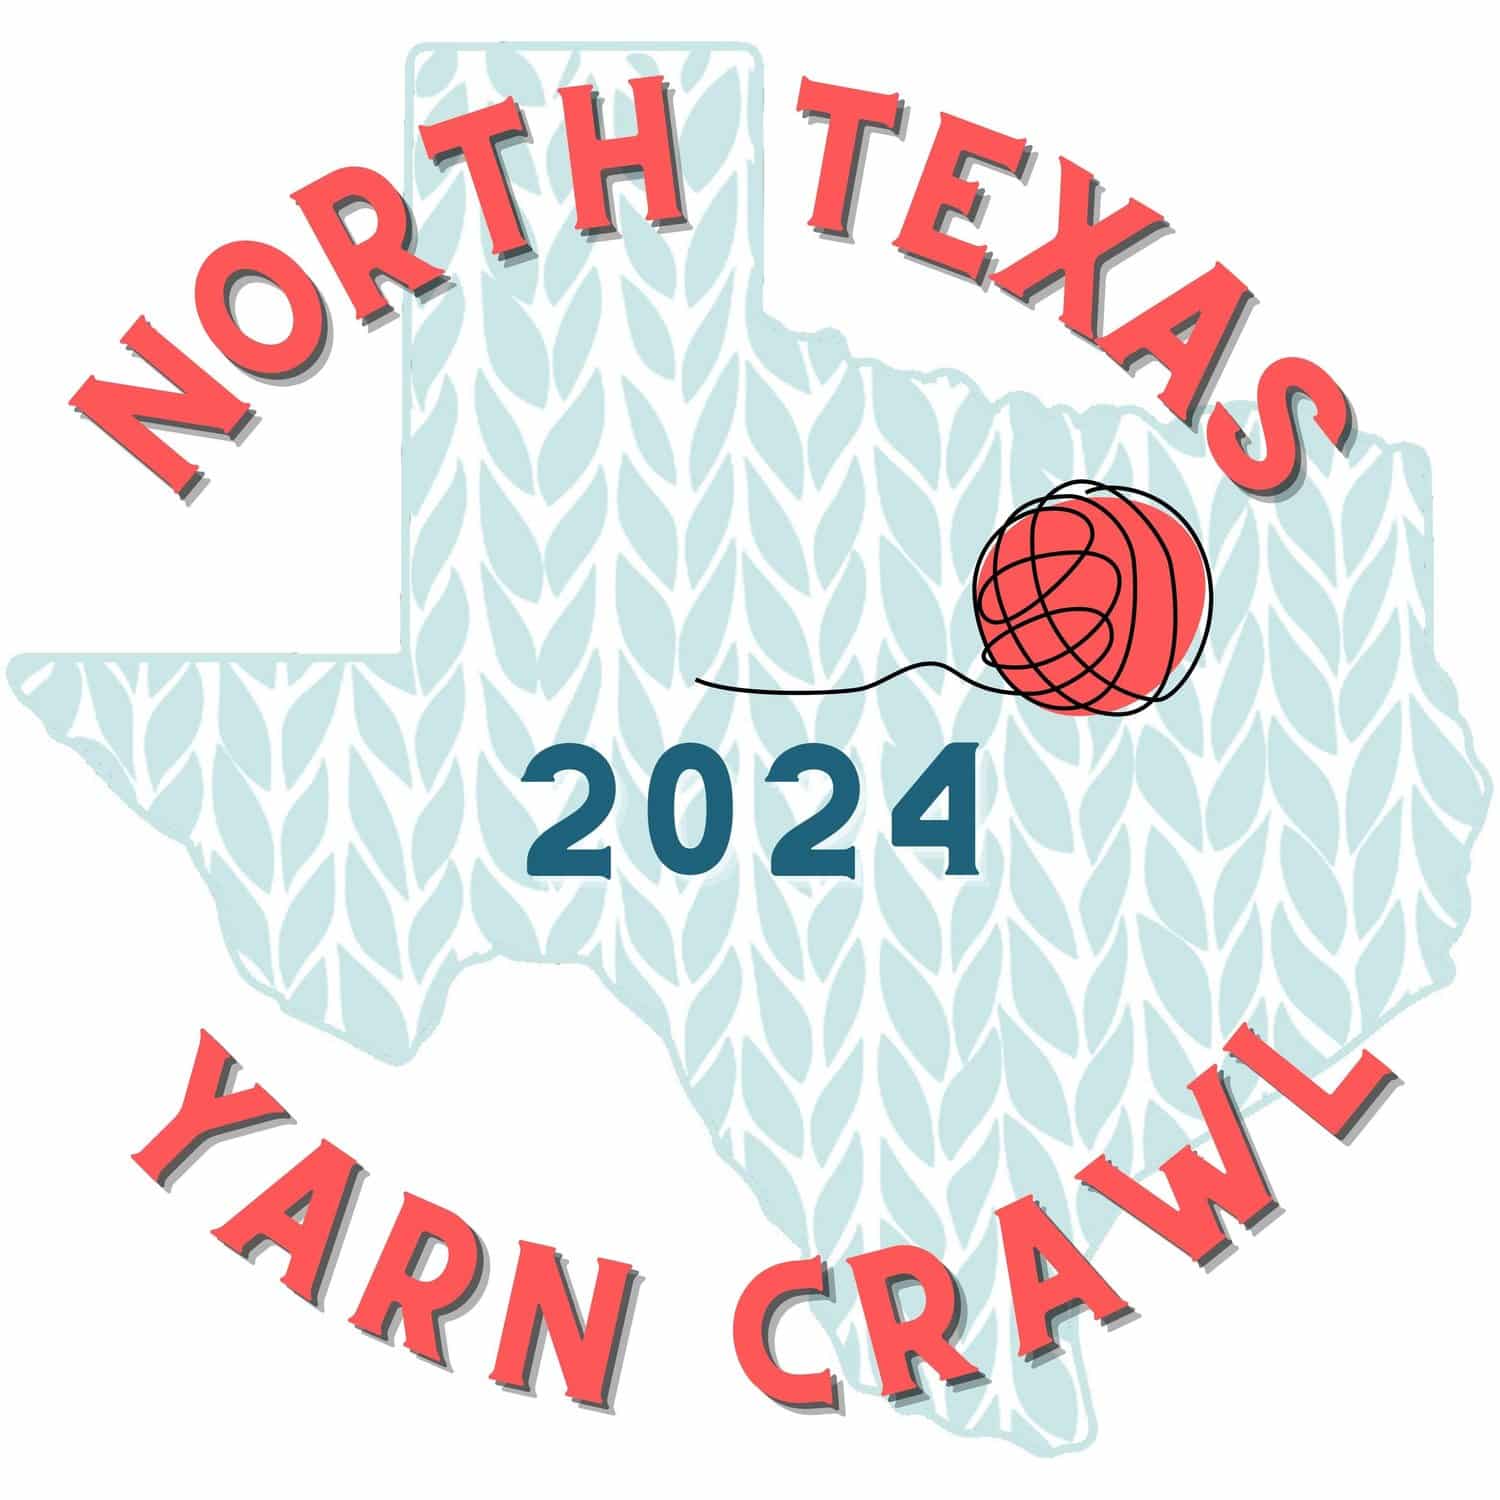 North Texas Yarn Crawl 2024 7